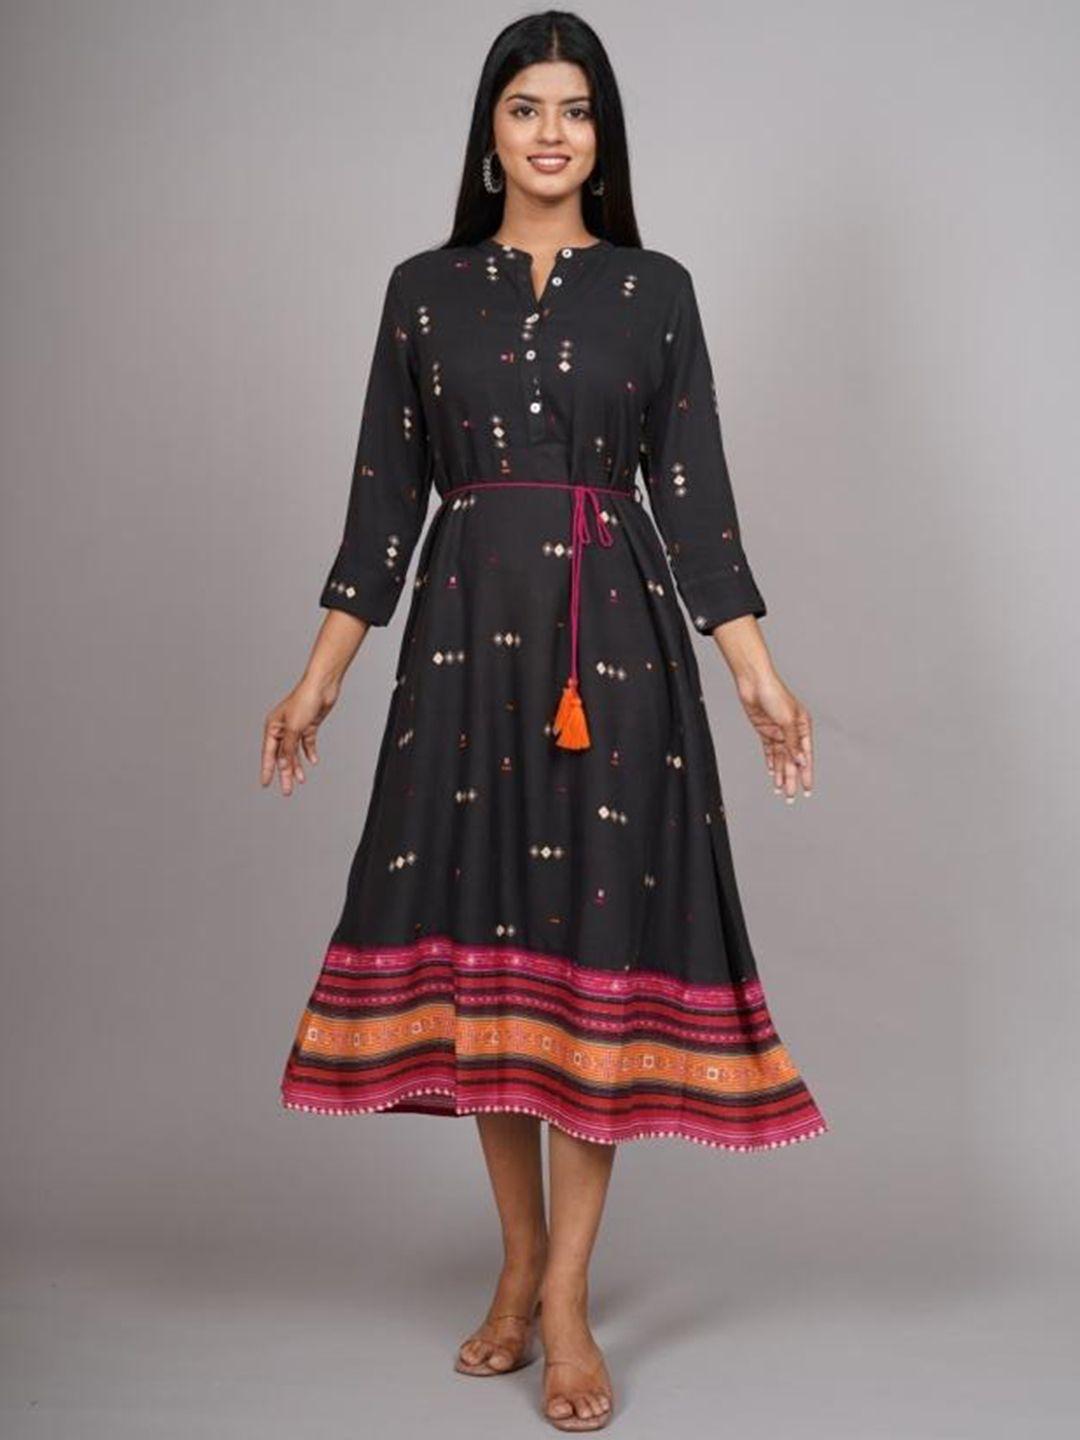 here&now women plus size black printed ethnic dresse